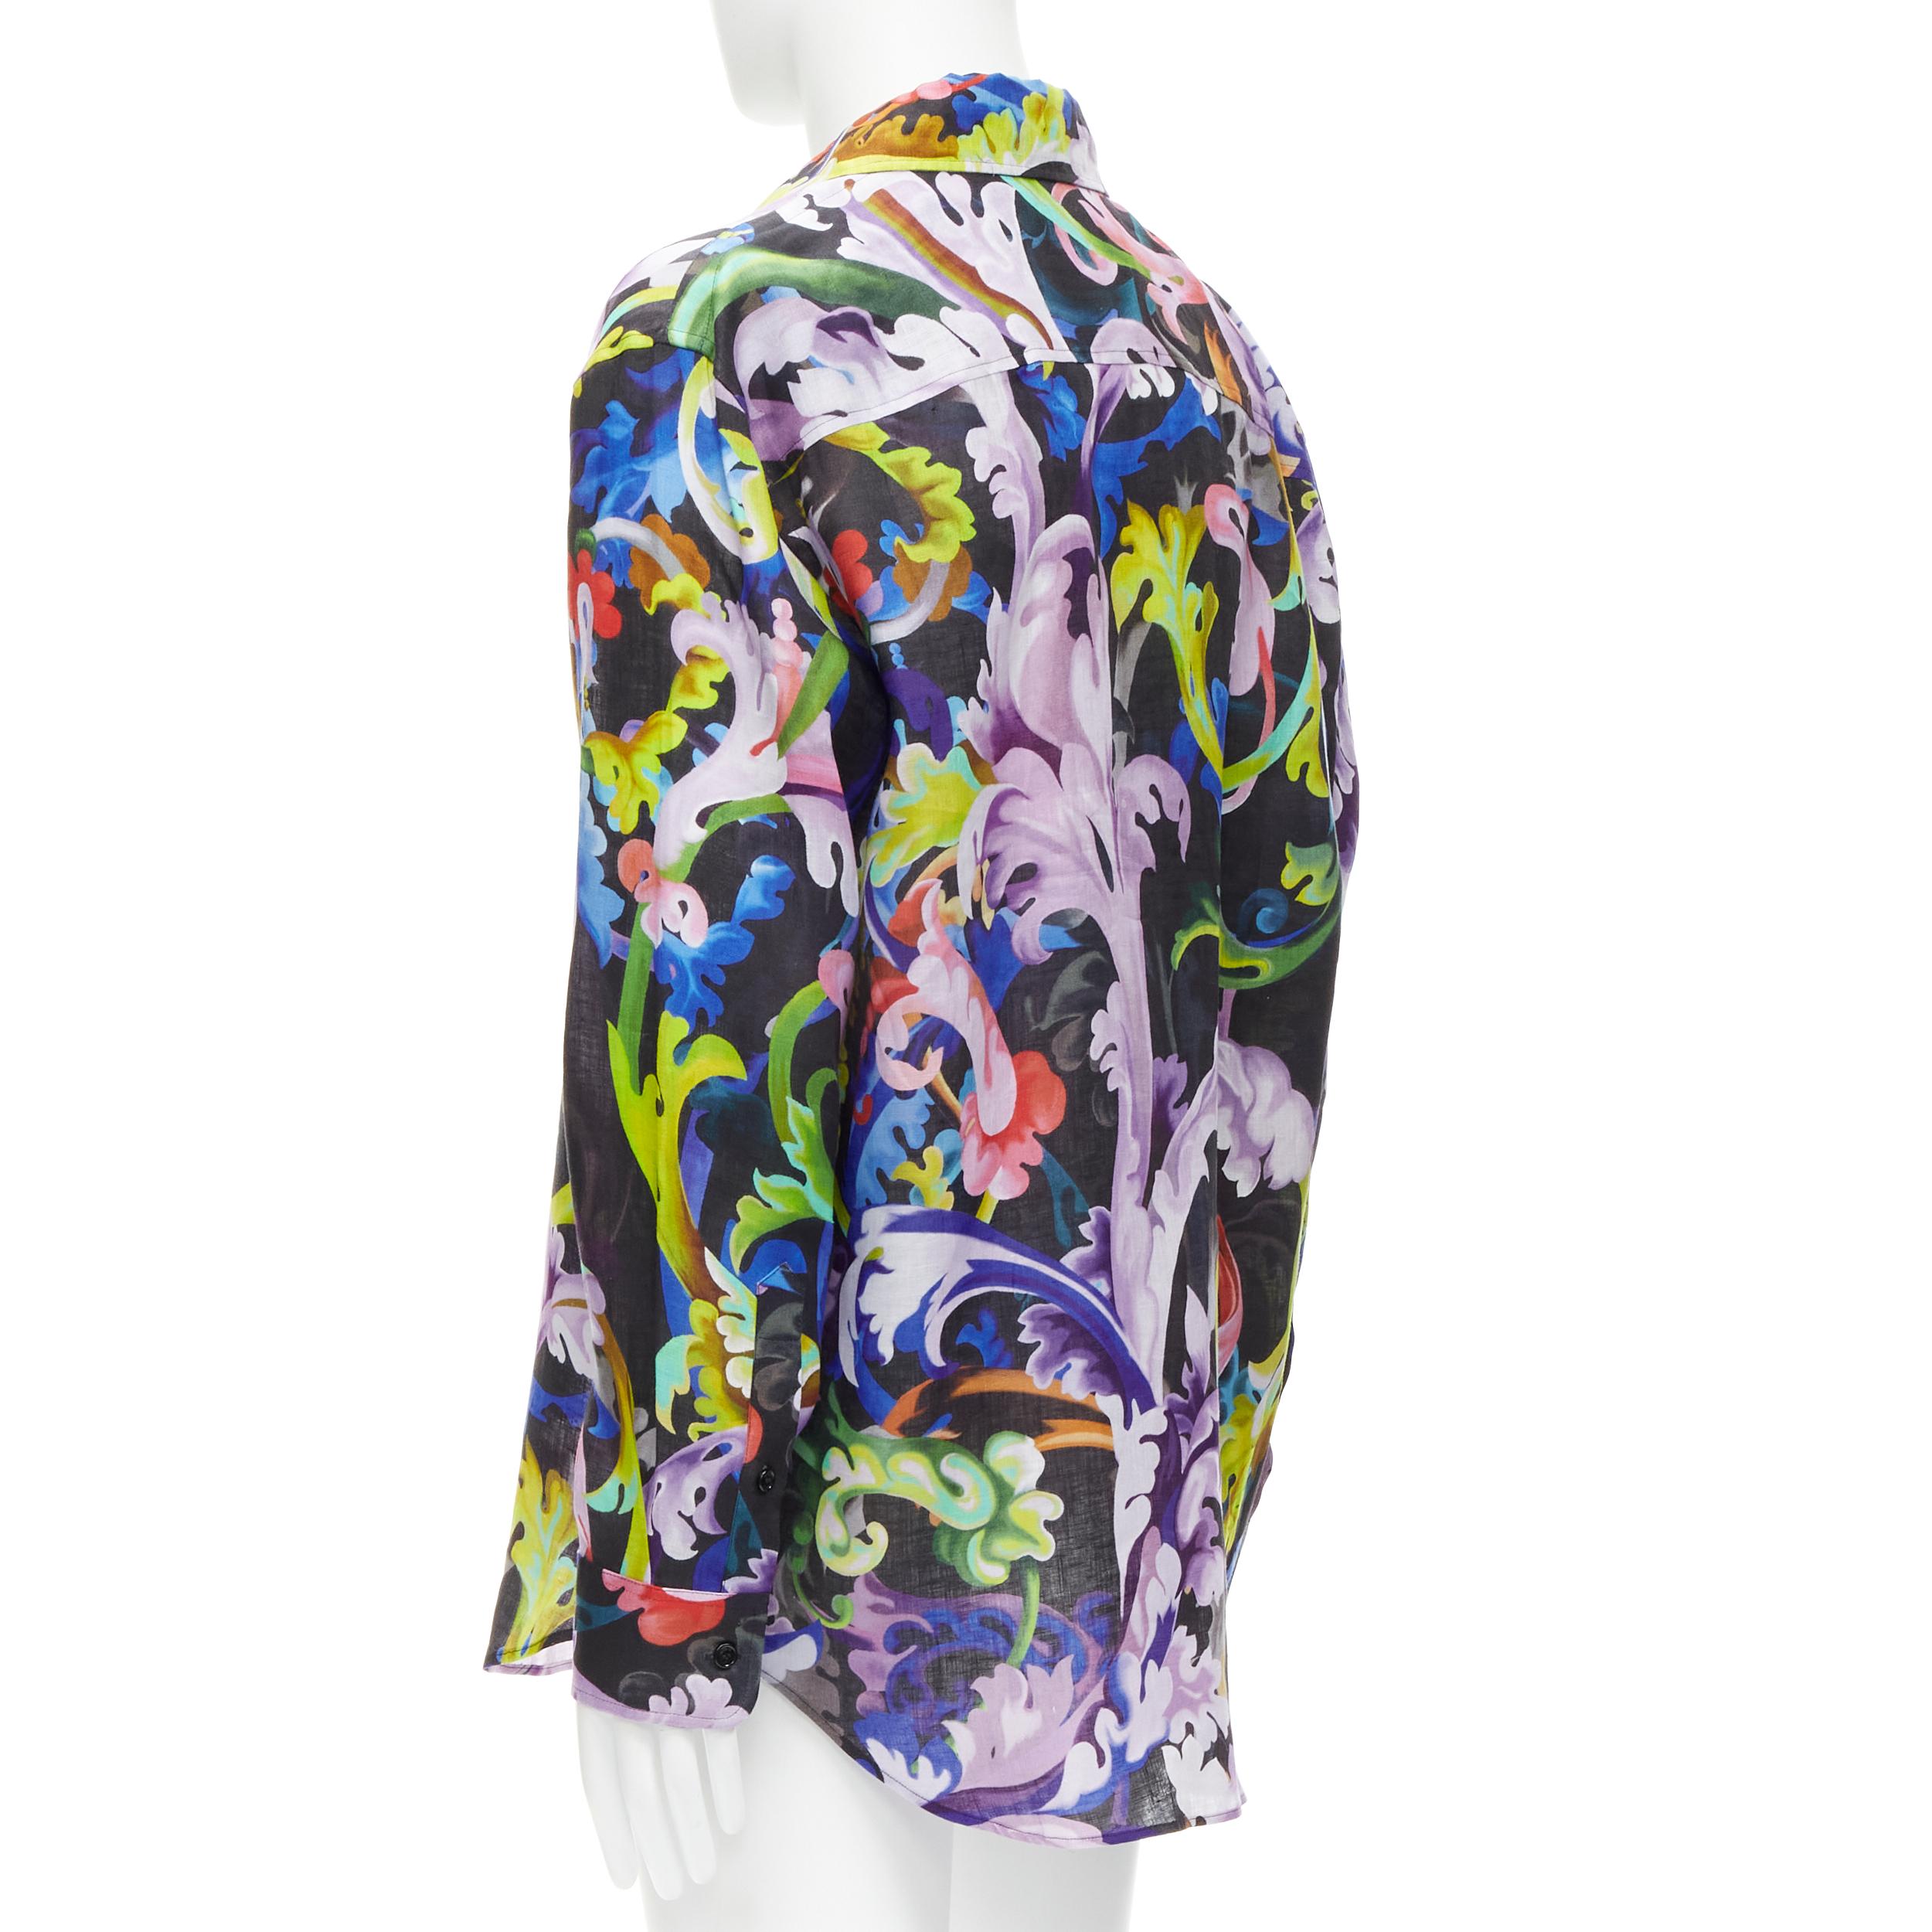 Men's new VERSACE 2021 Runway Baroccoflage colorful baroque floral linen shirt EU40 L For Sale